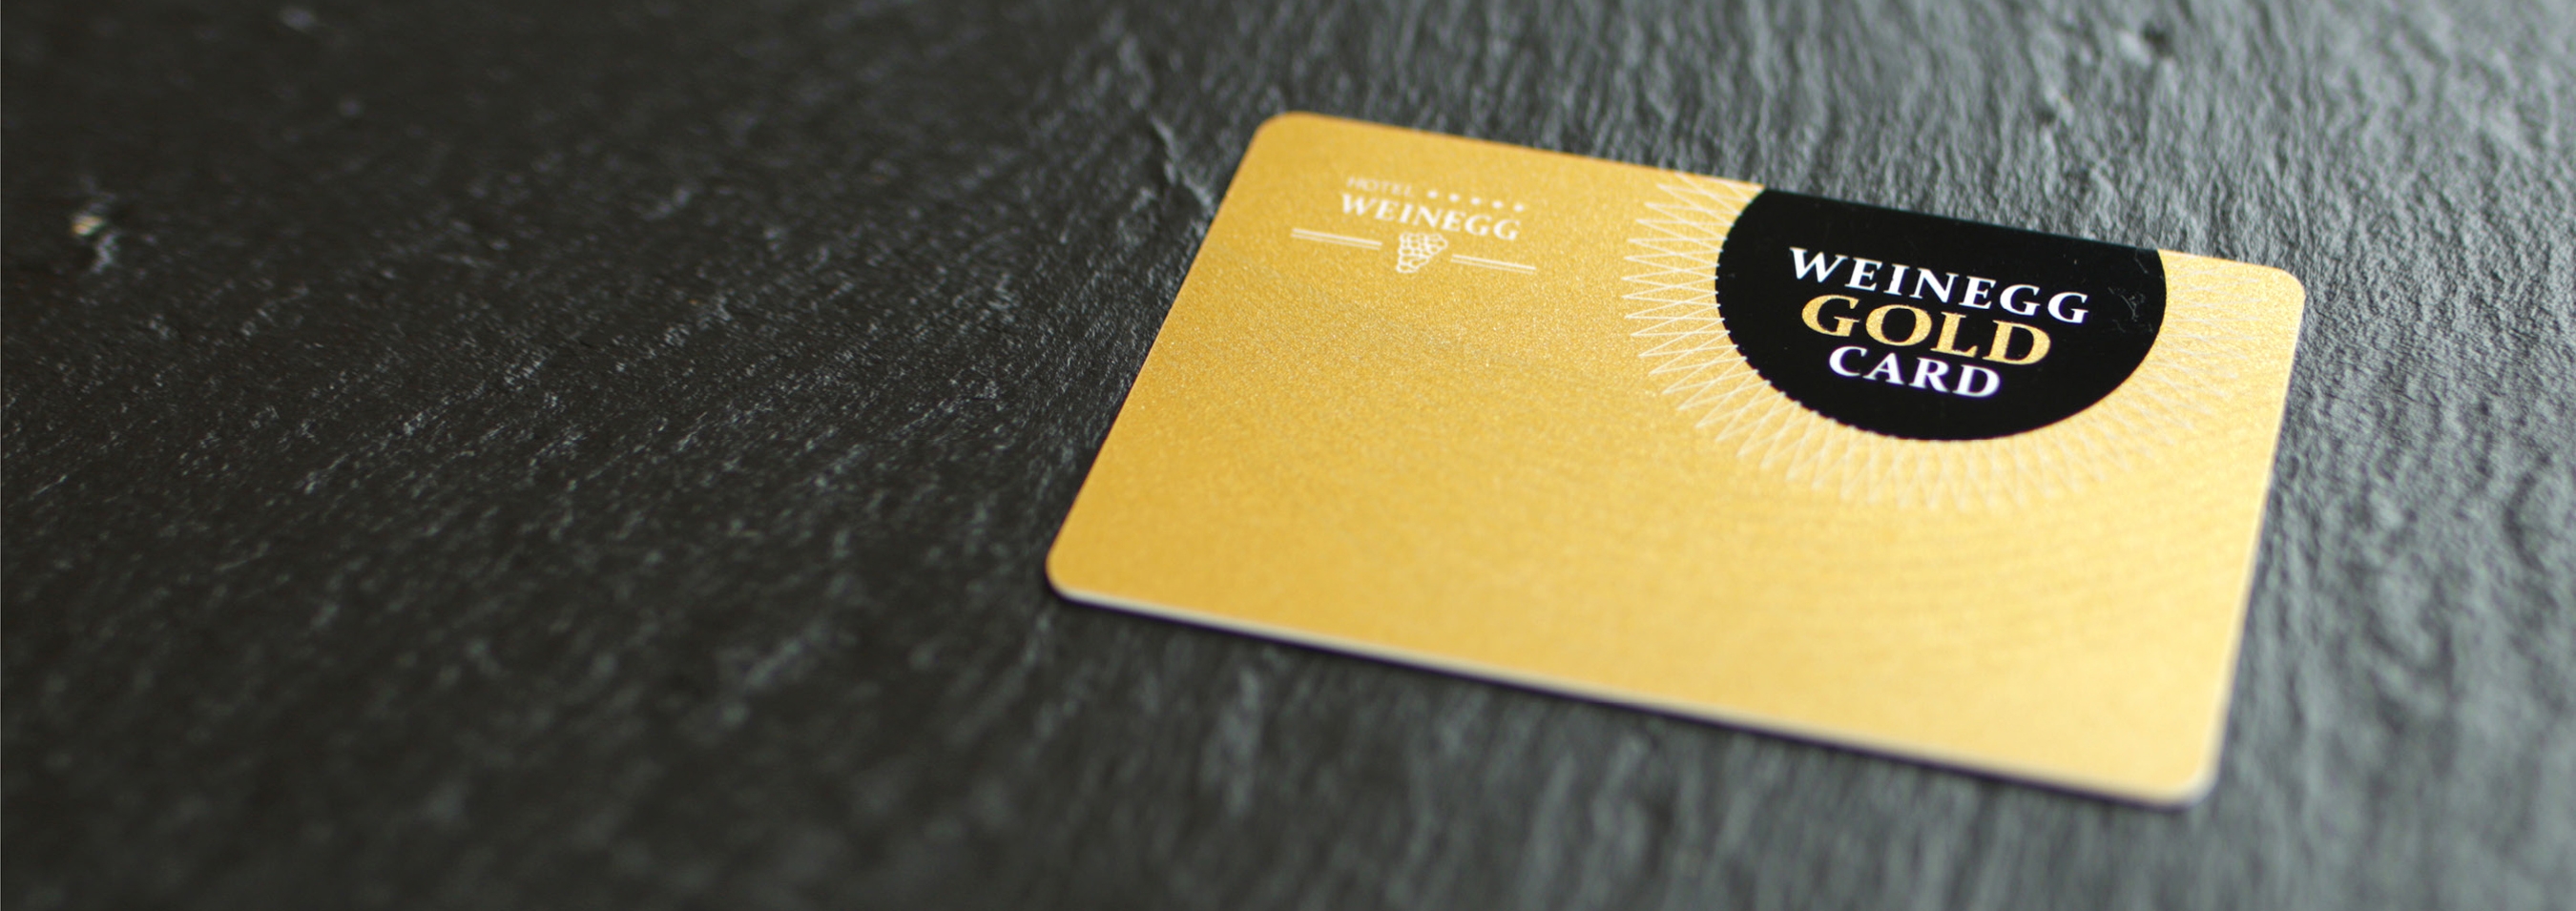 Weinegg Gold Card